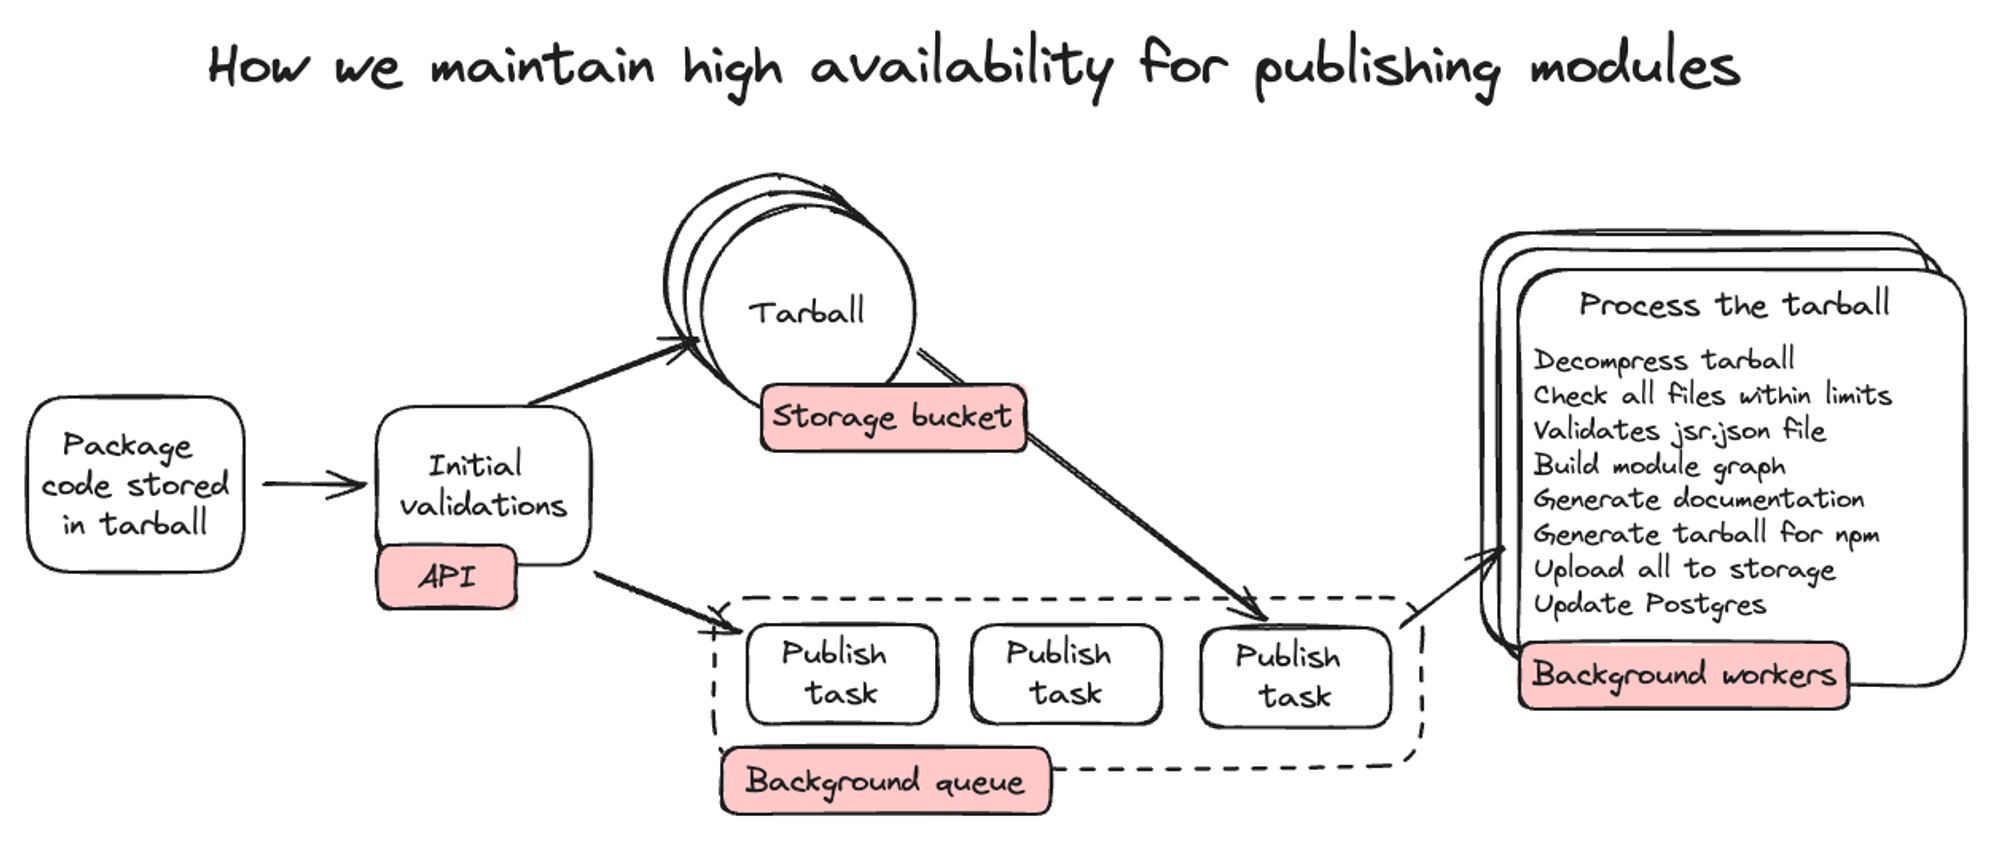 Maintaining availability in publishing